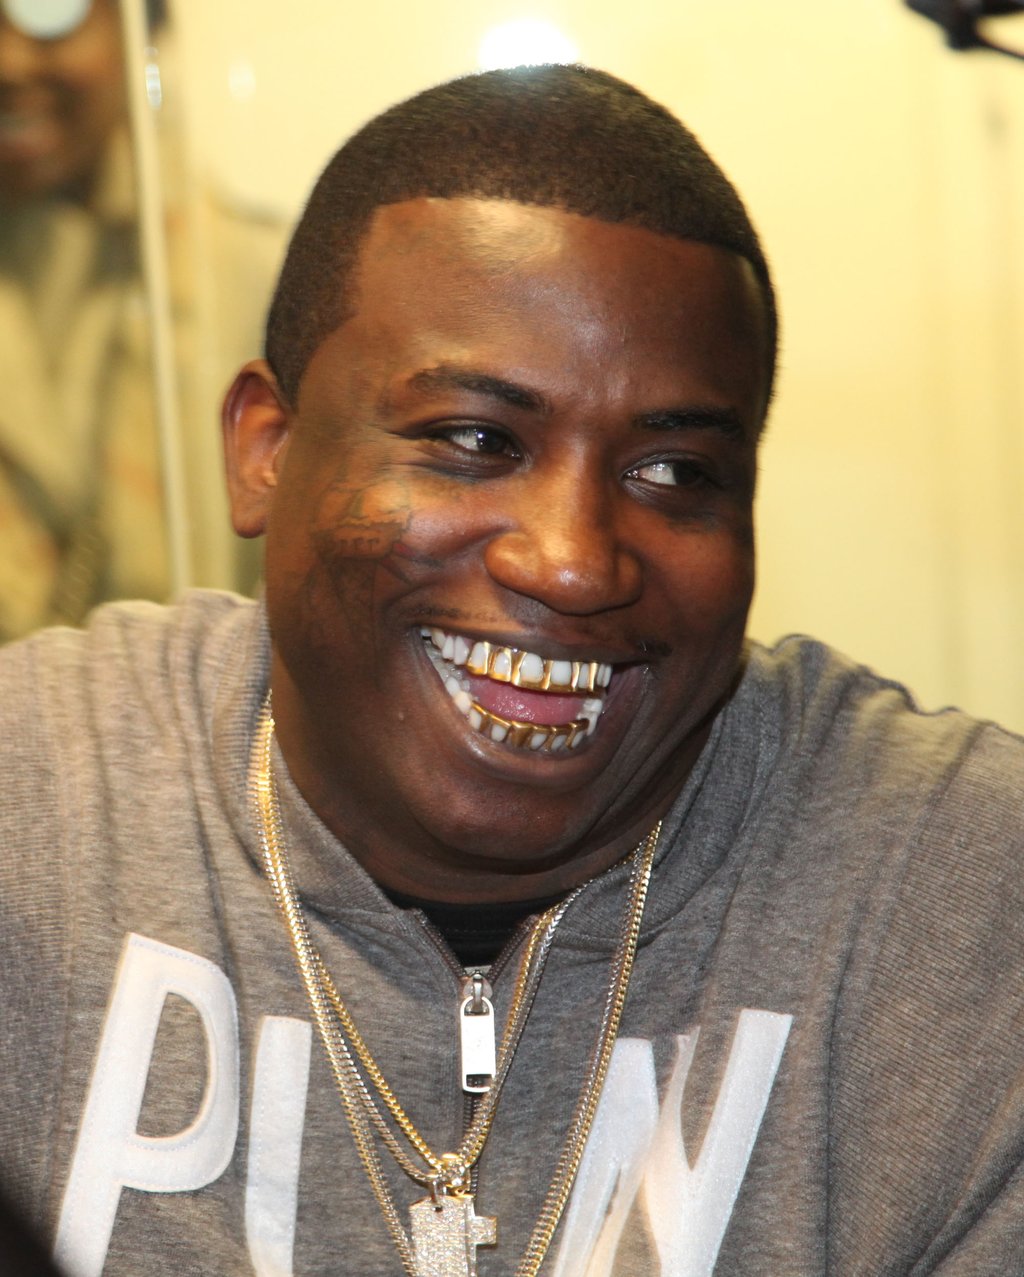 zij is Vijftig kamp GucciisFree: Rapper Gucci Mane is Fresh Outta Prison | BellaNaija